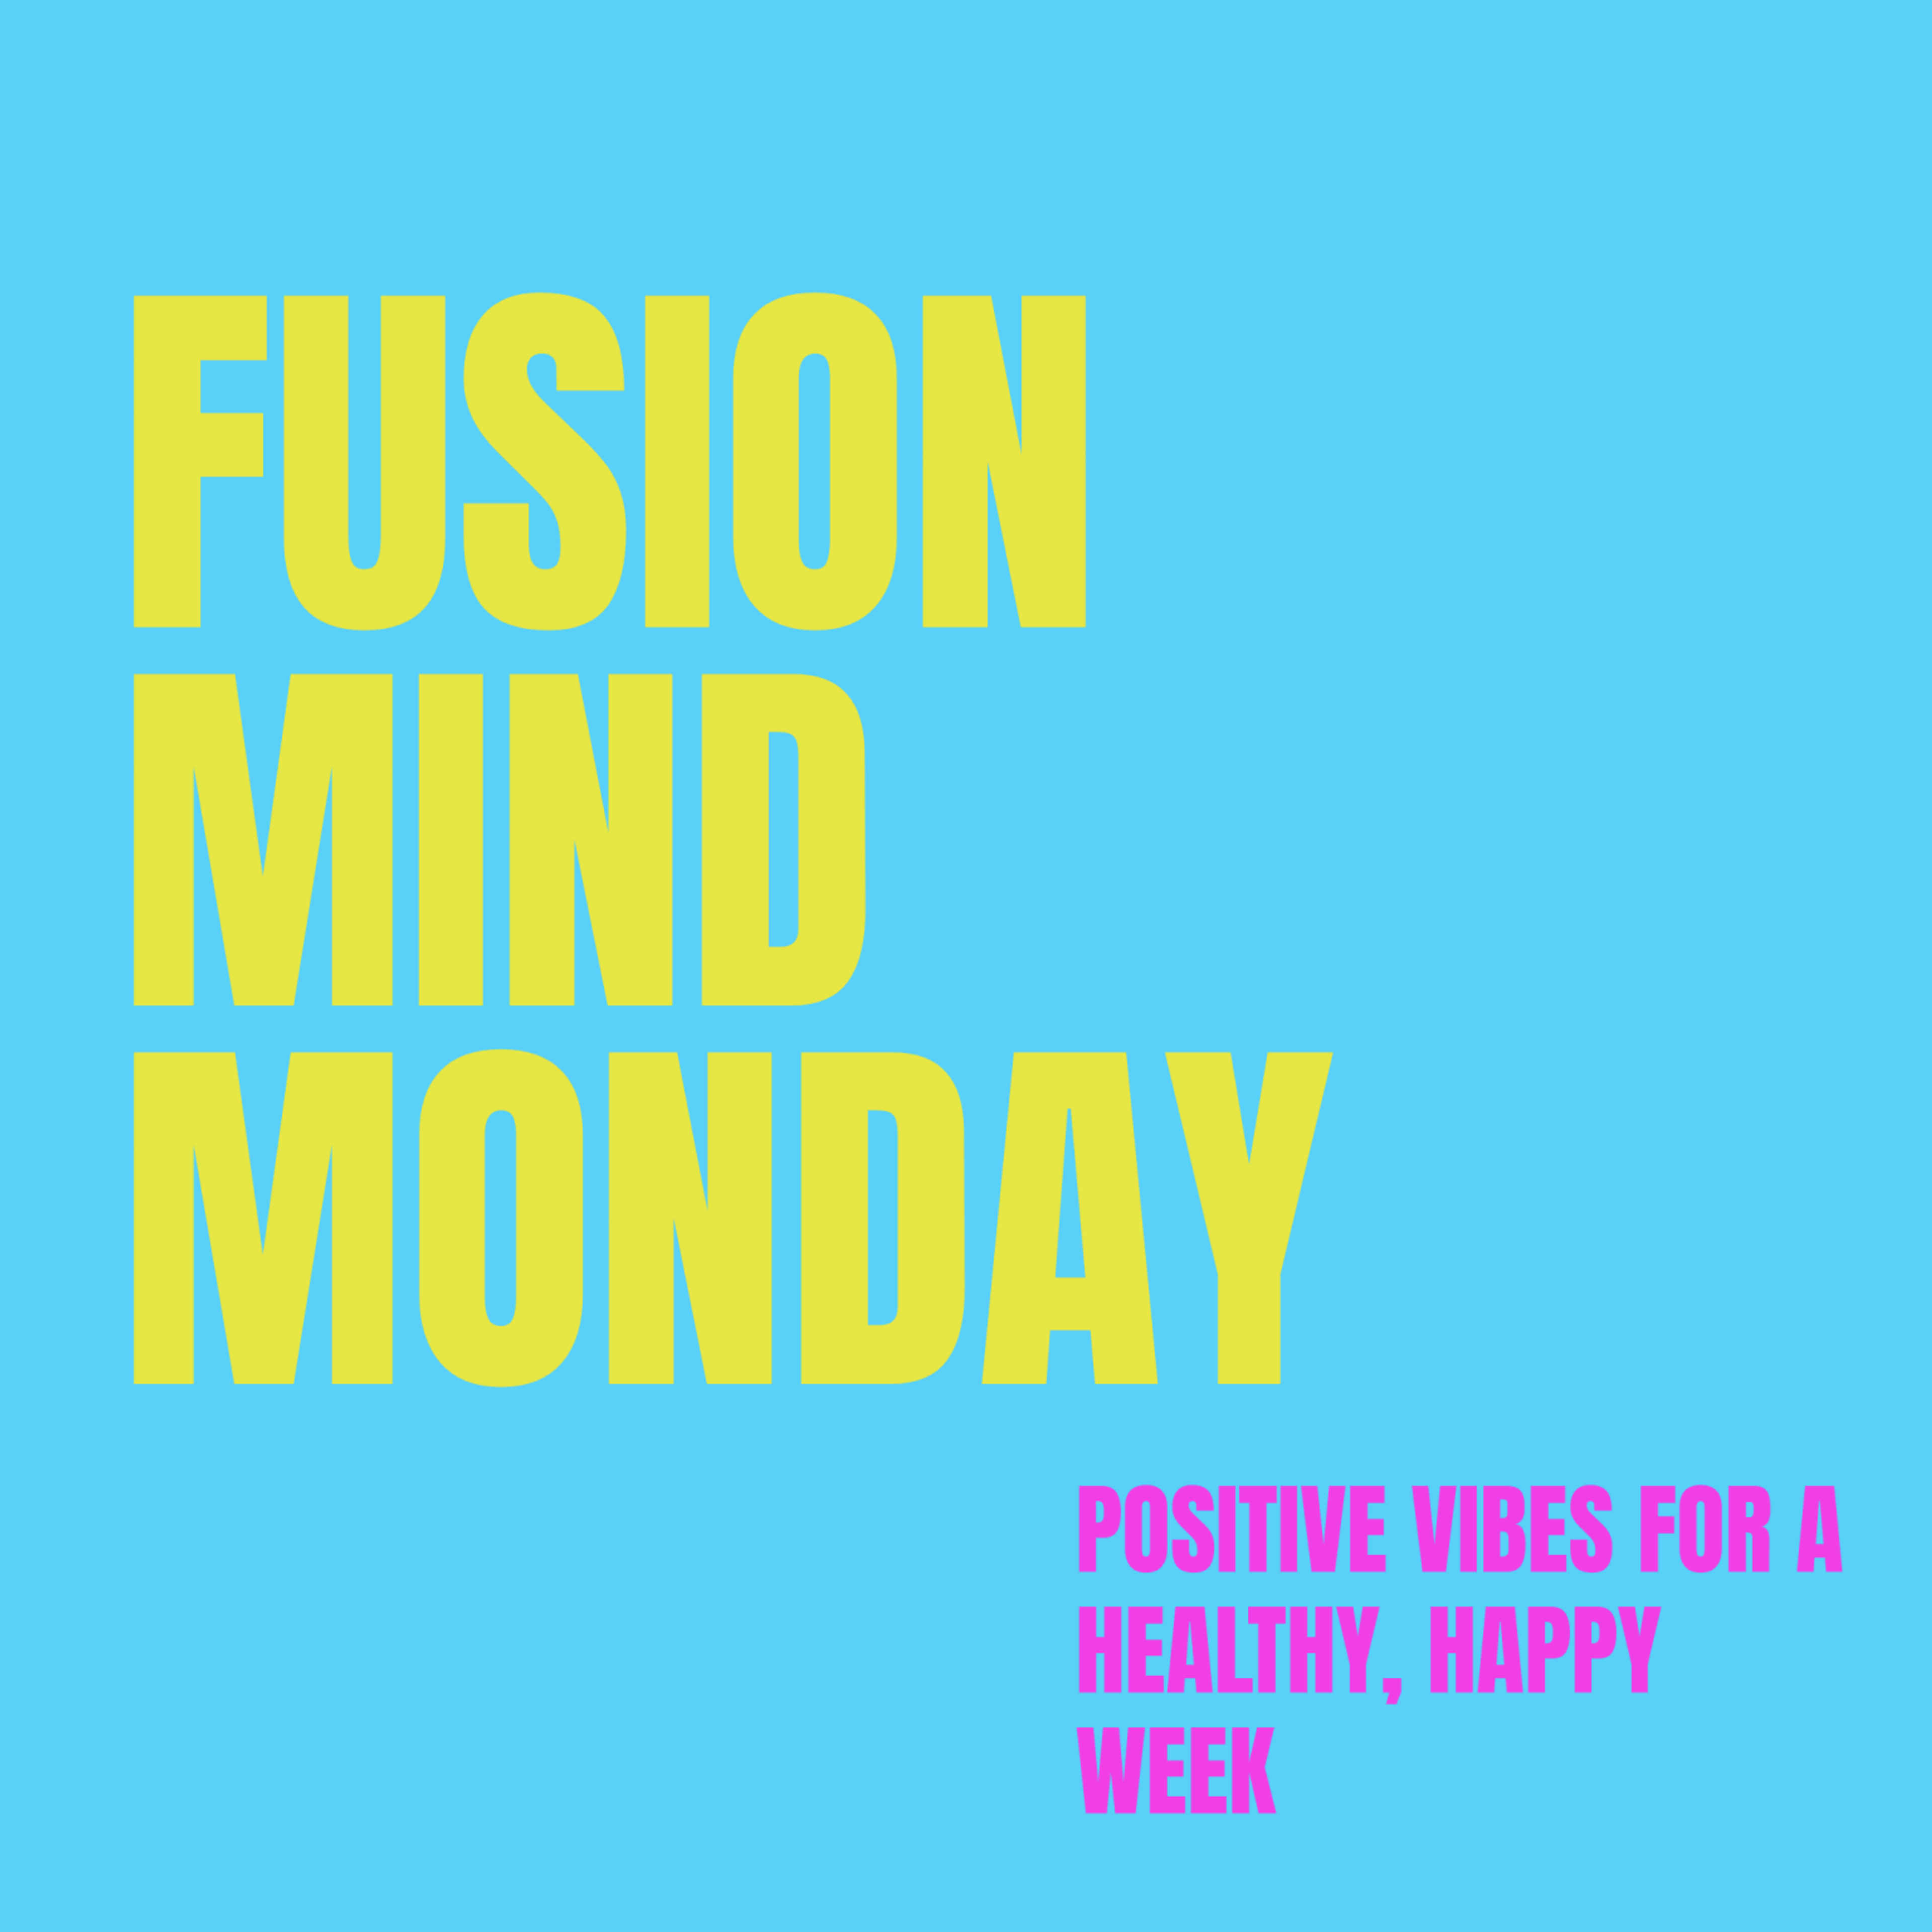 Image for blog post: Fusion Mind Monday – November 16th